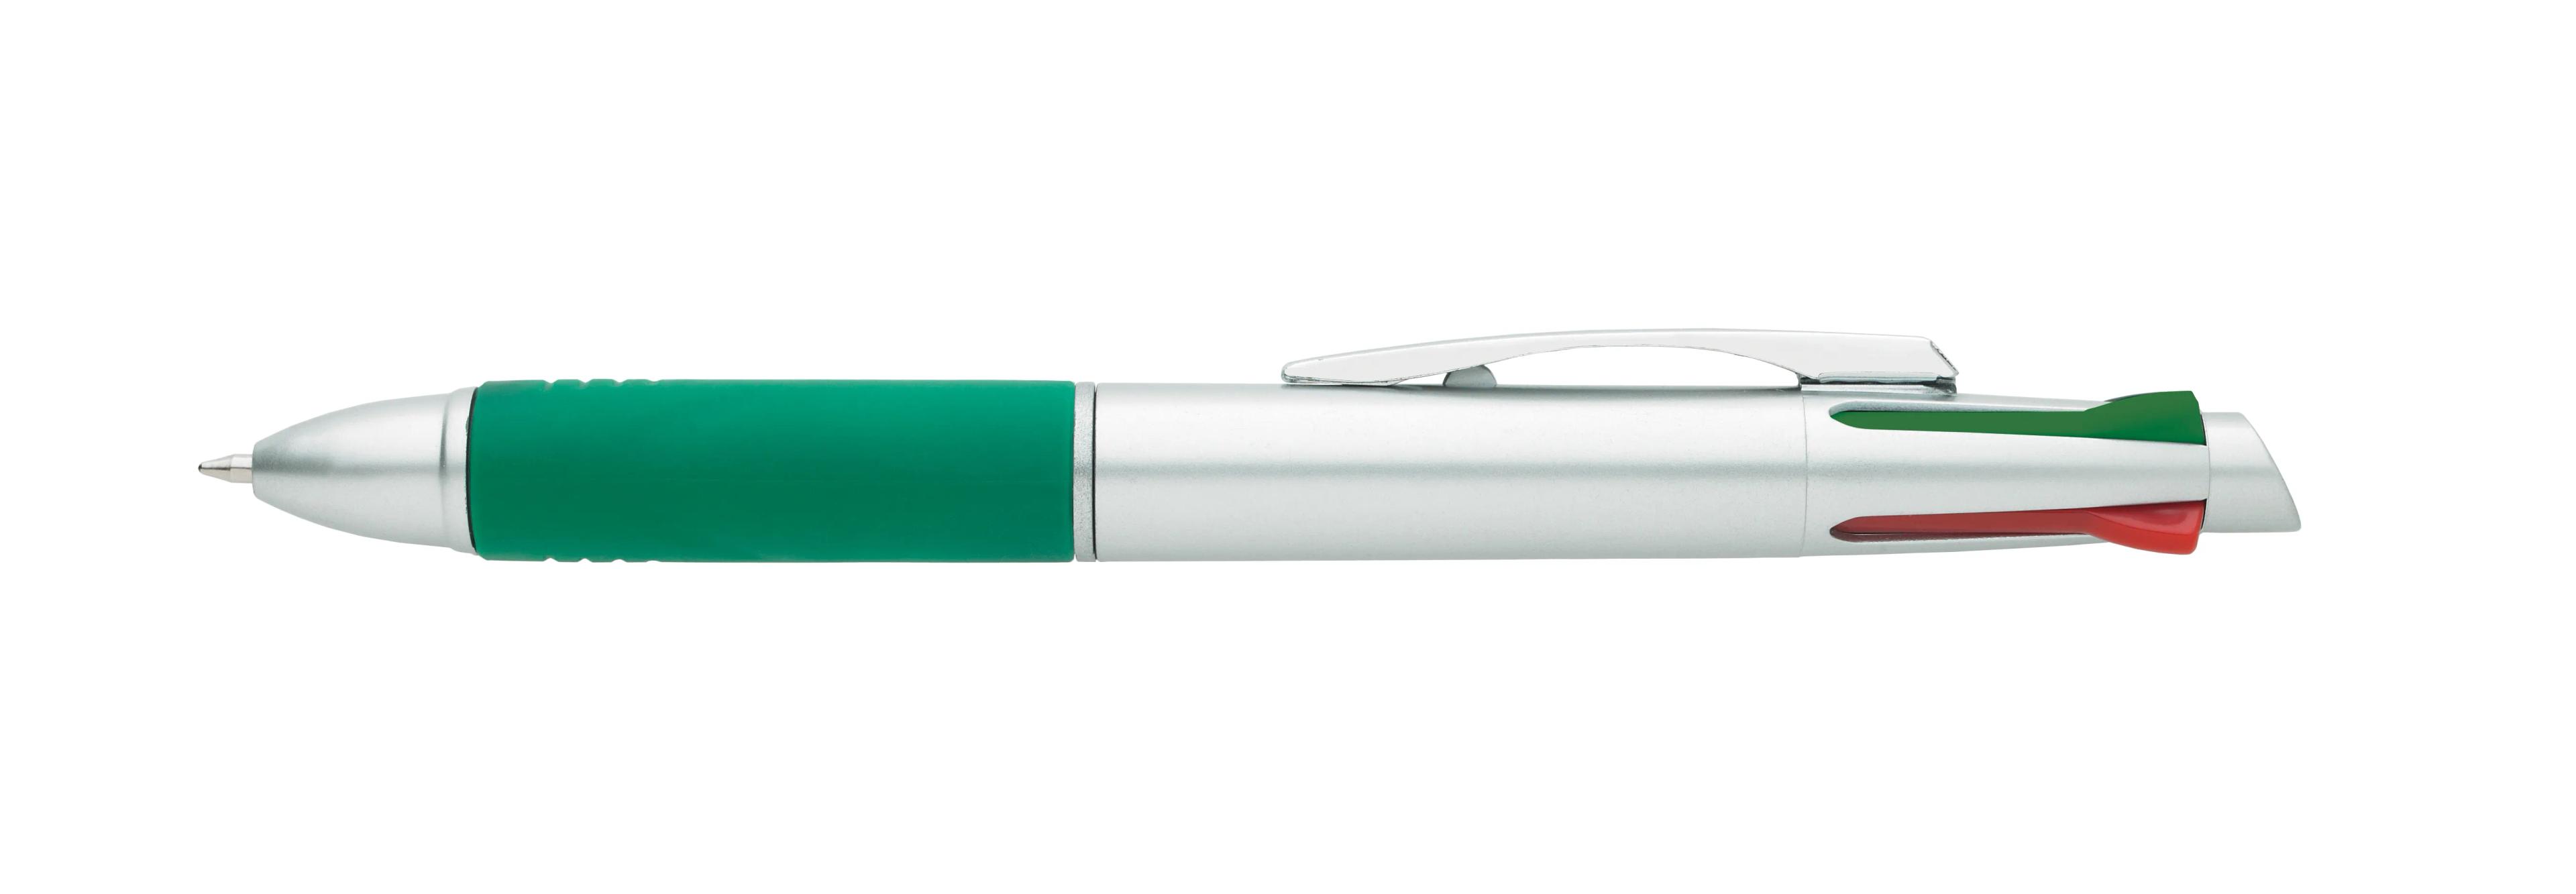 Enterprise Pen 2 of 10